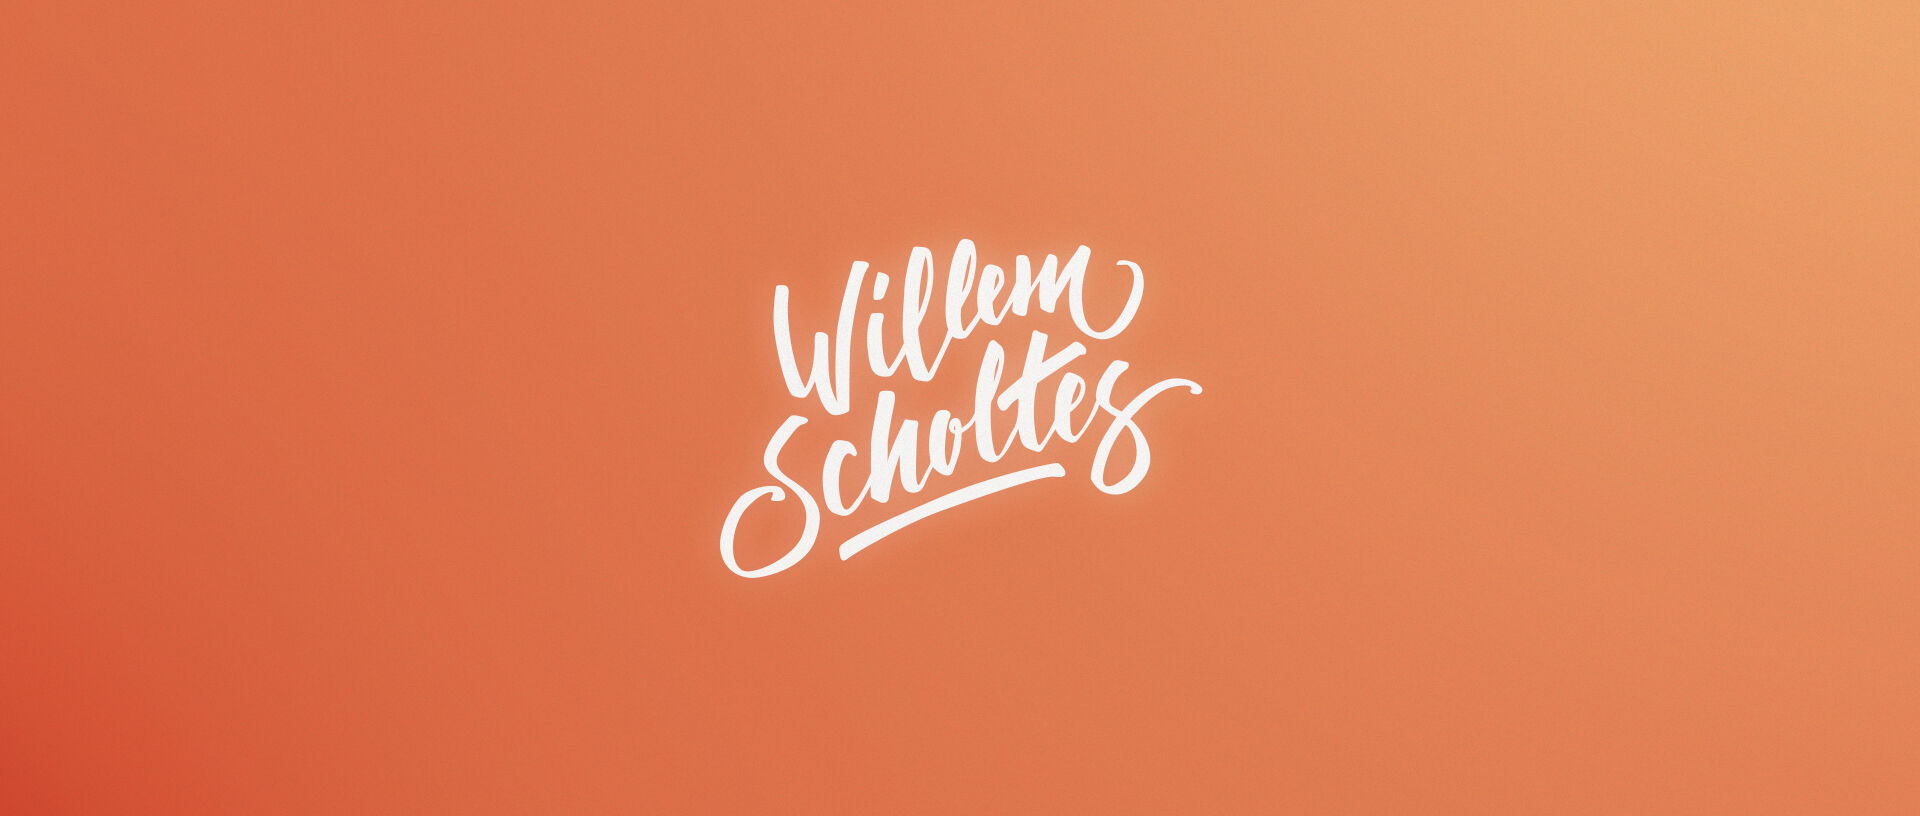 Reel 2020 - Willem Scholtes